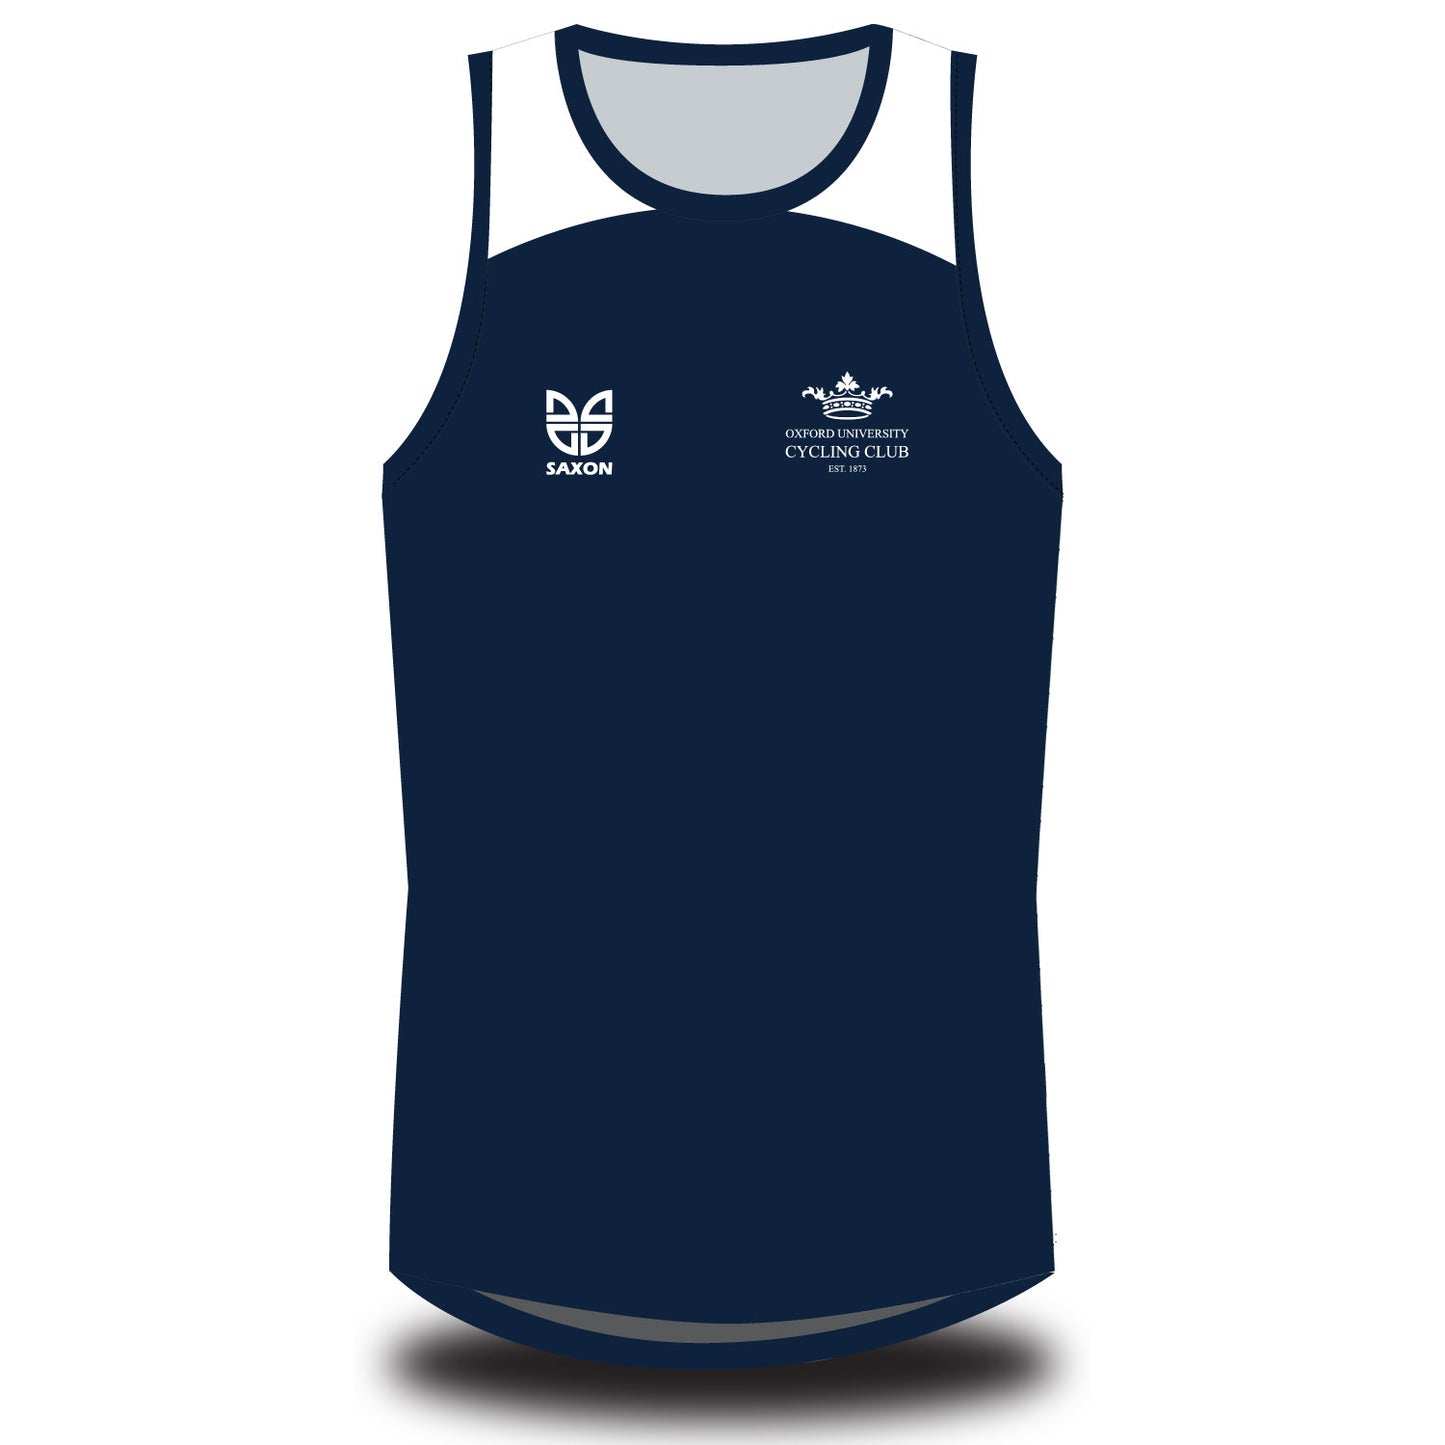 Oxford University Cycling Club Navy & White Vest